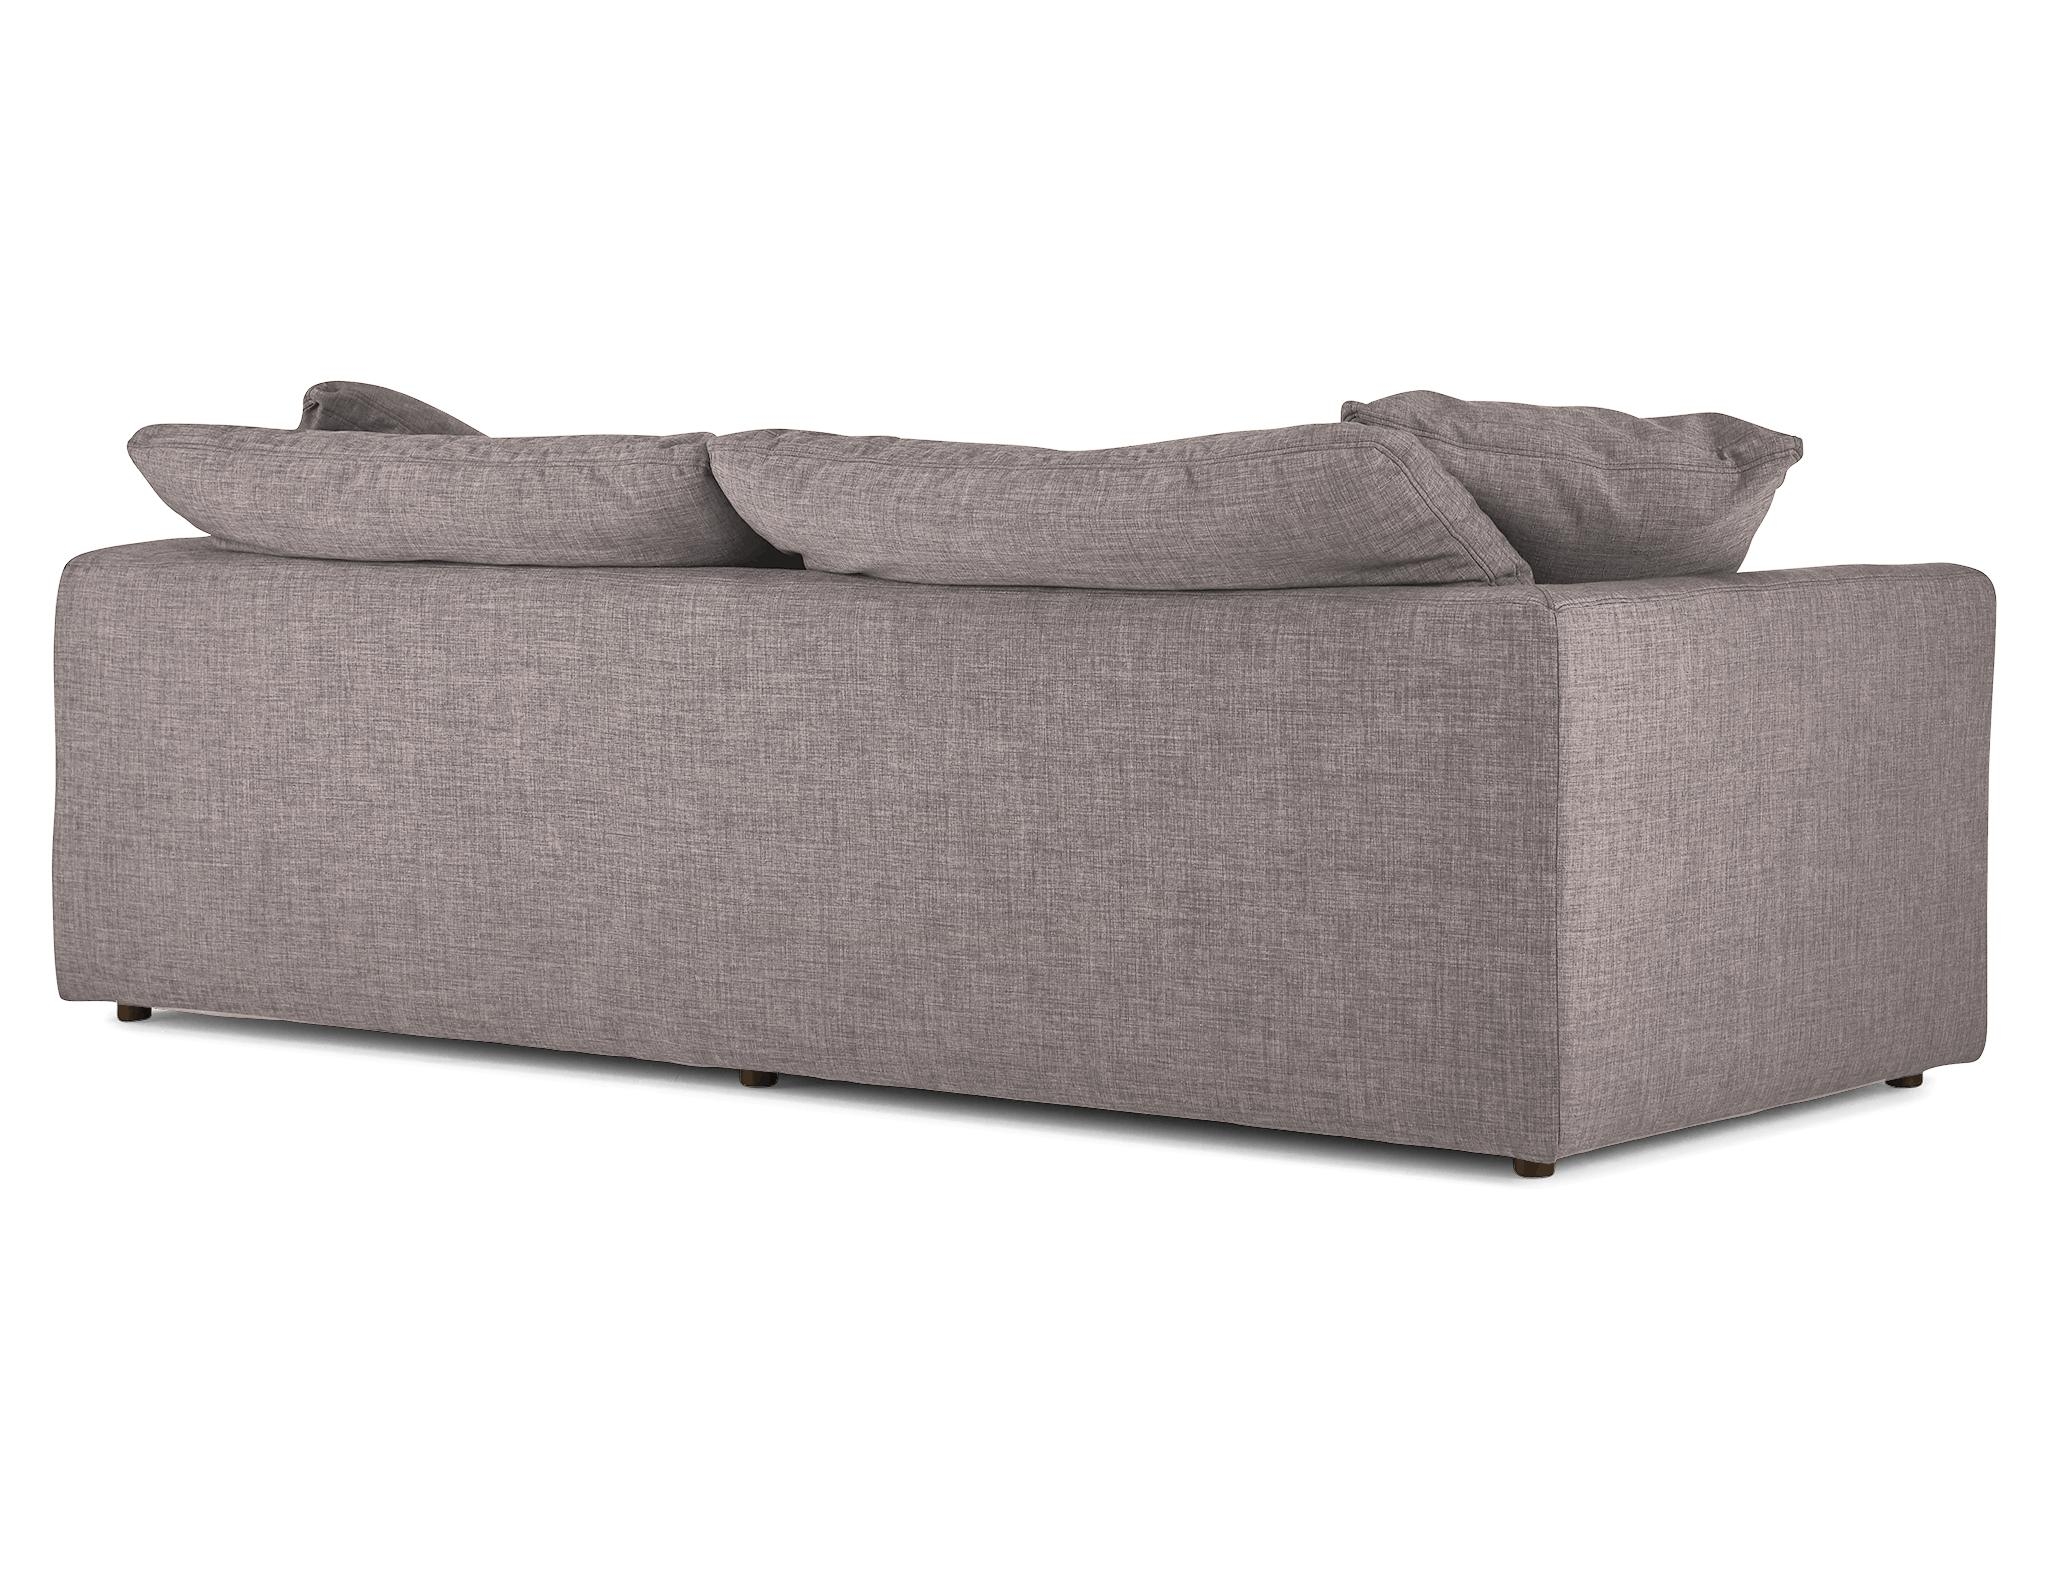 Purple Bryant Mid Century Modern Sofa - Sunbrella Premier Wisteria - Image 3